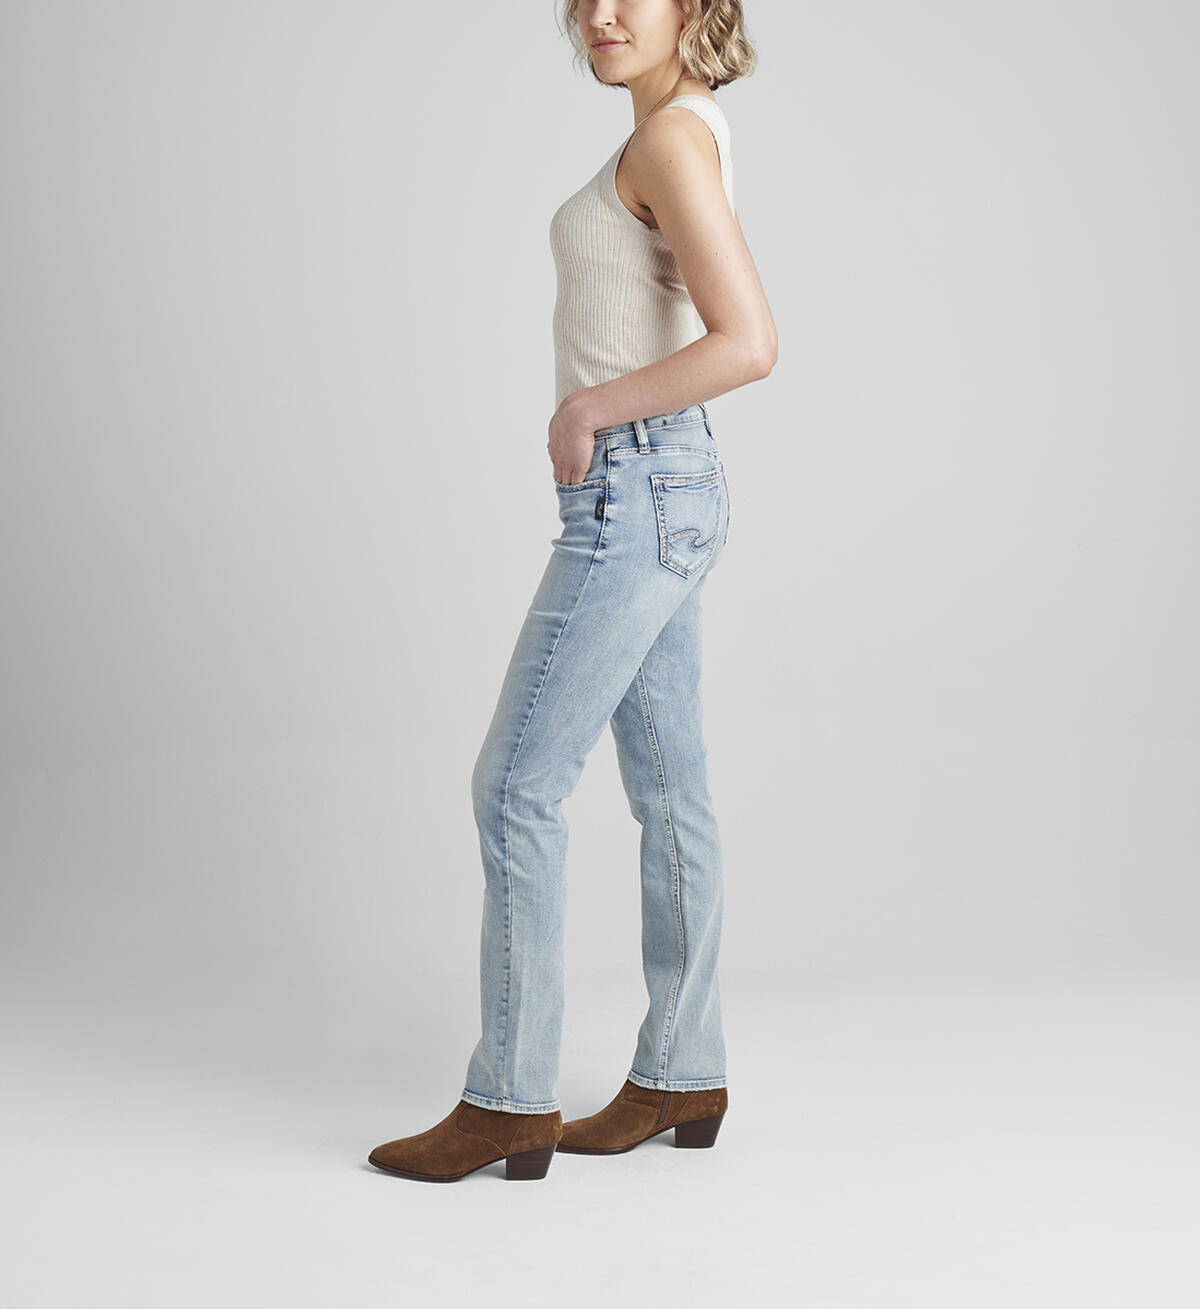 Elyse Mid Rise Straight Leg Jeans, , hi-res image number 2